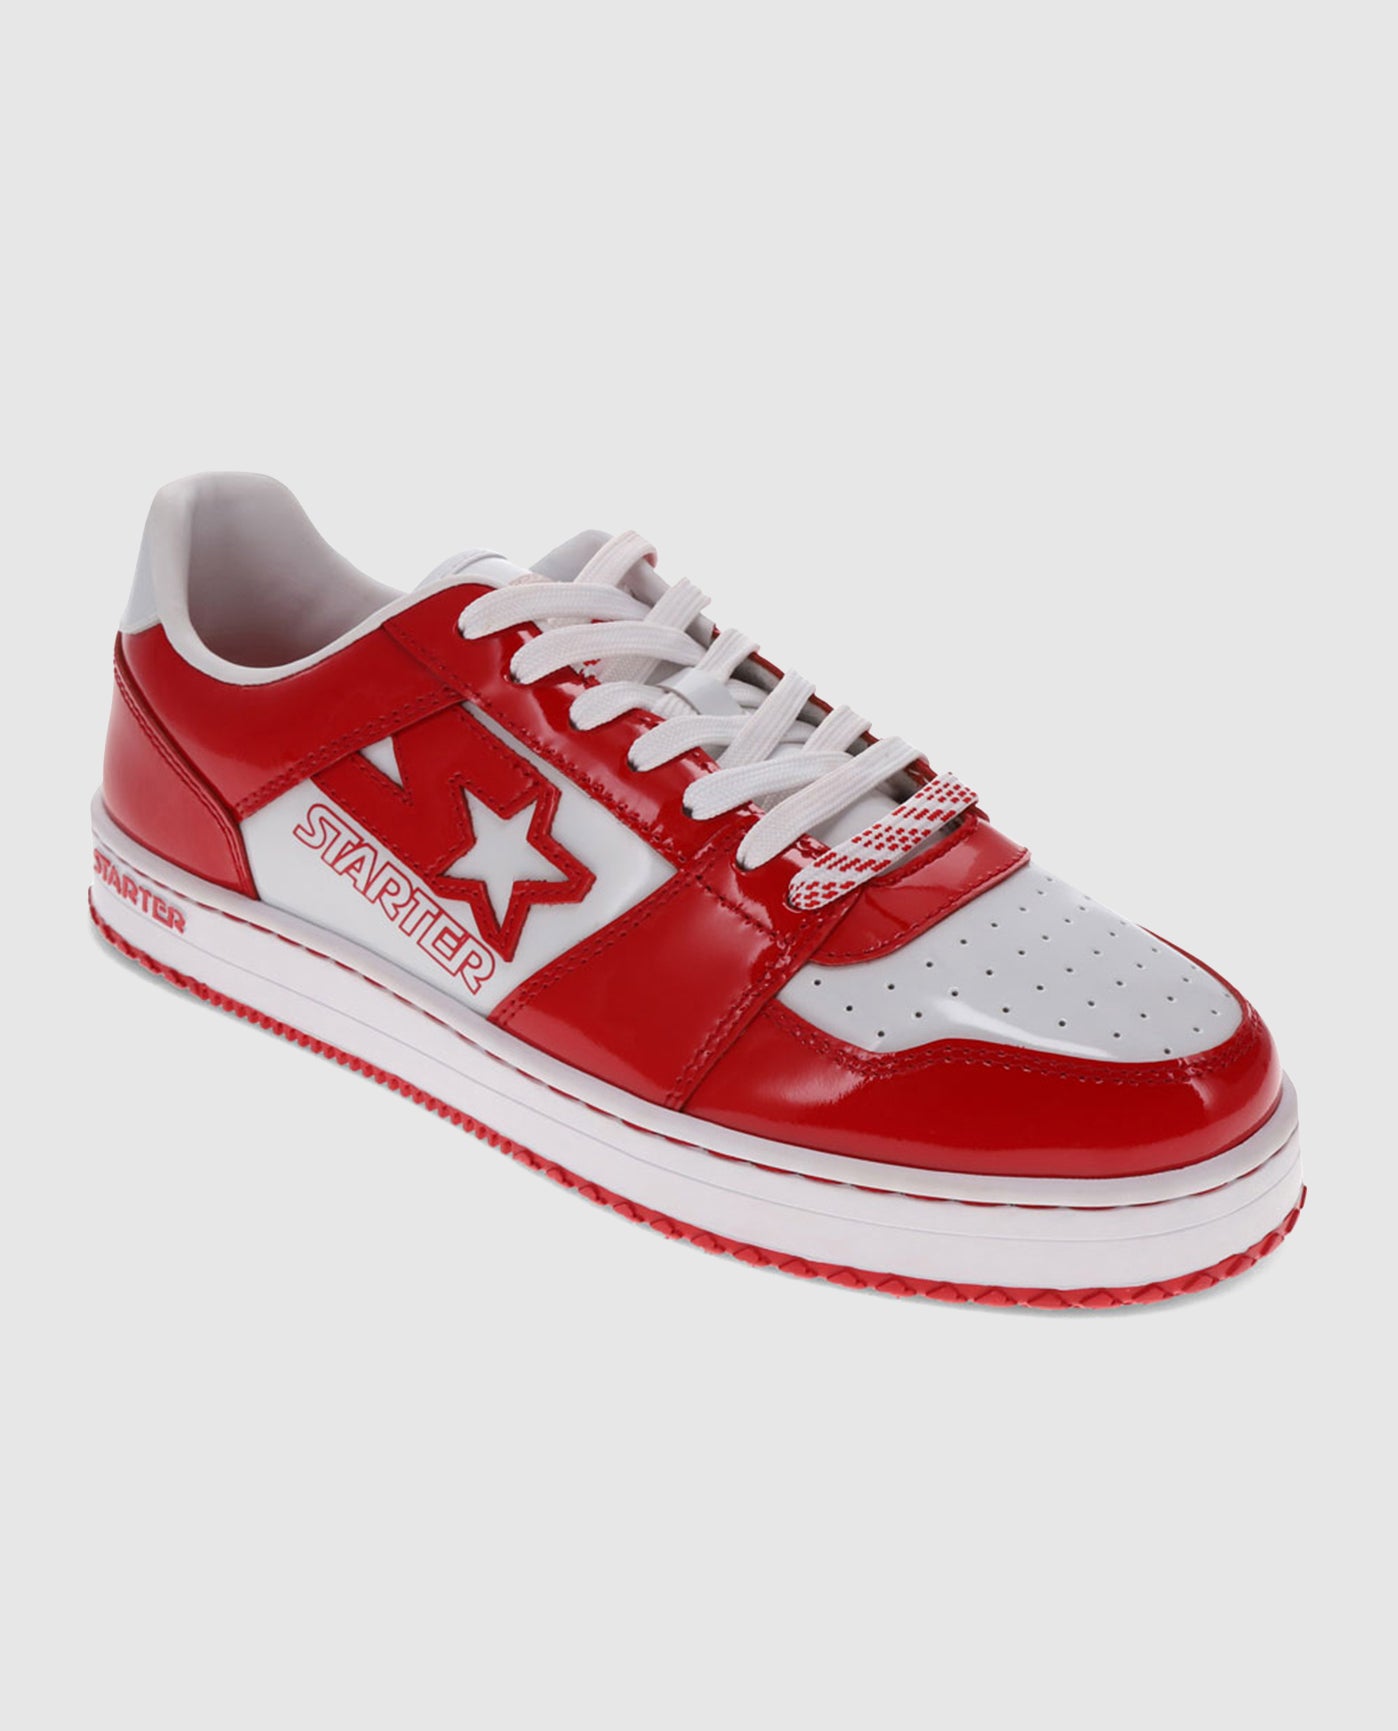 Starter Kids Lfs 1 Casual Lace-up Sneaker Shoe, White/black, Size 3.5 :  Target